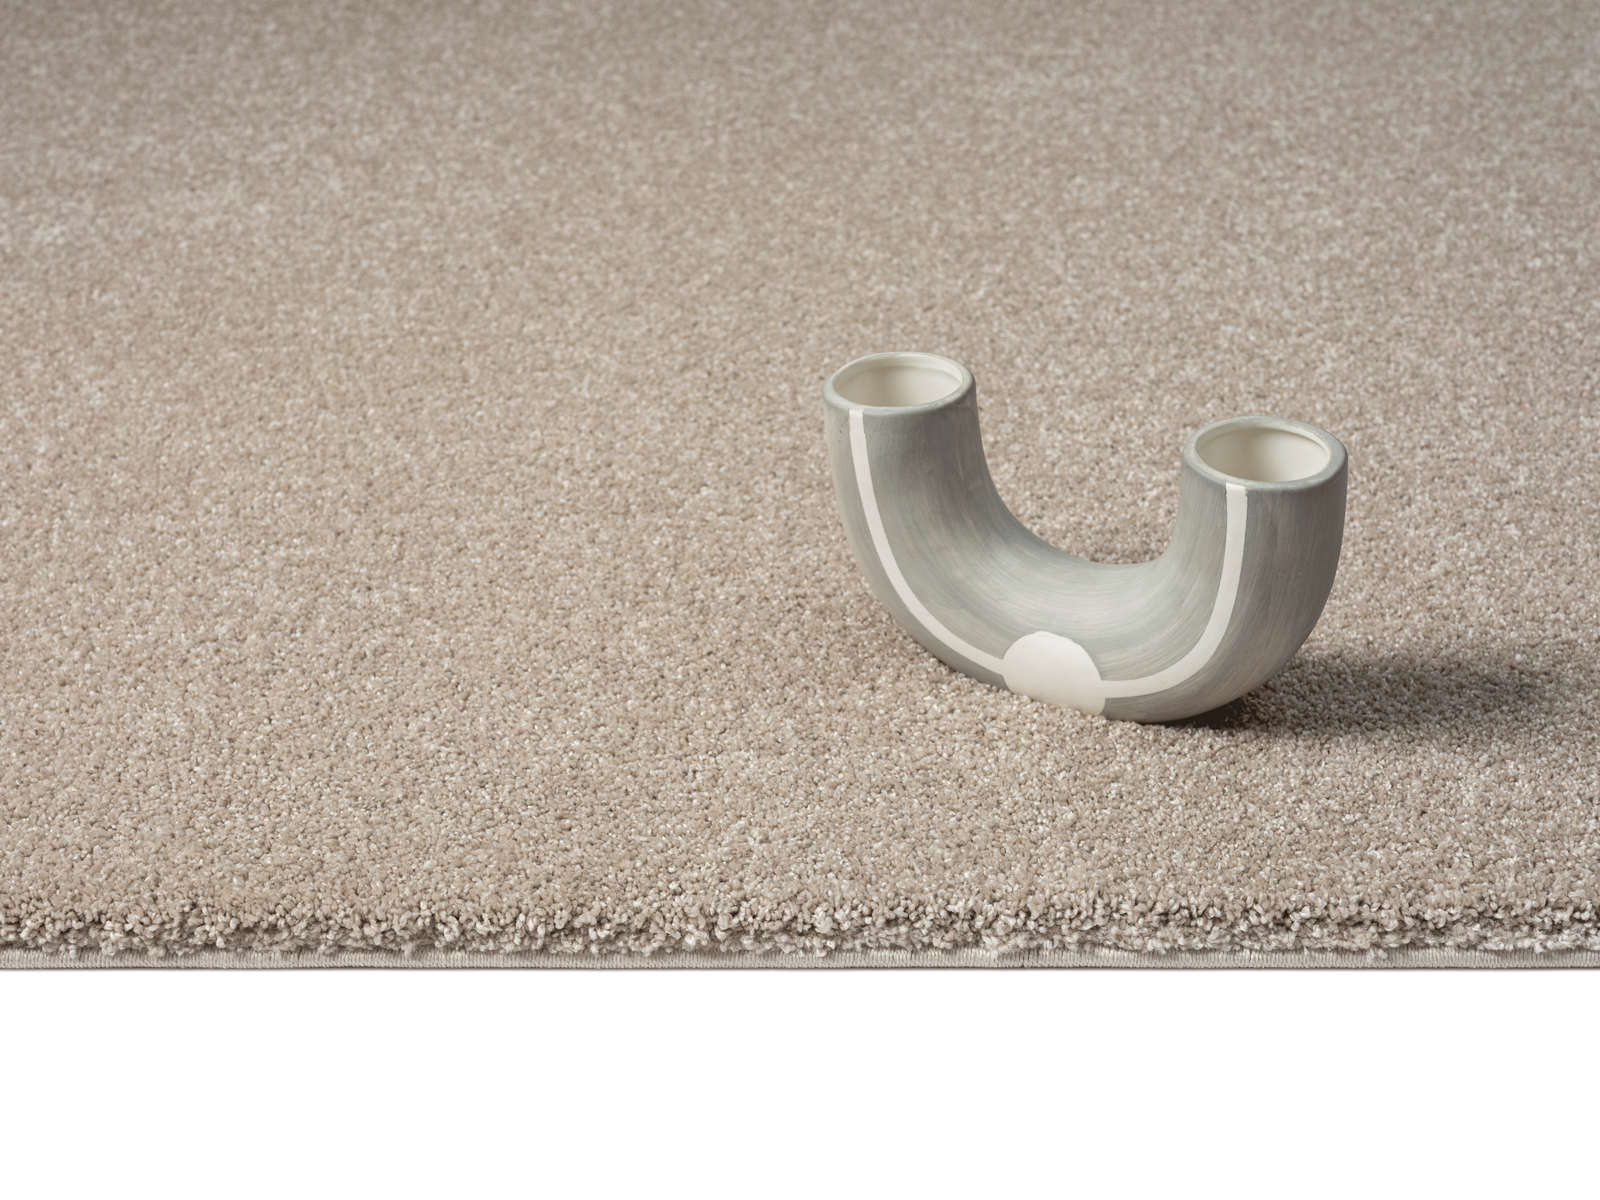             Soft short pile carpet in beige - 170 x 120 cm
        